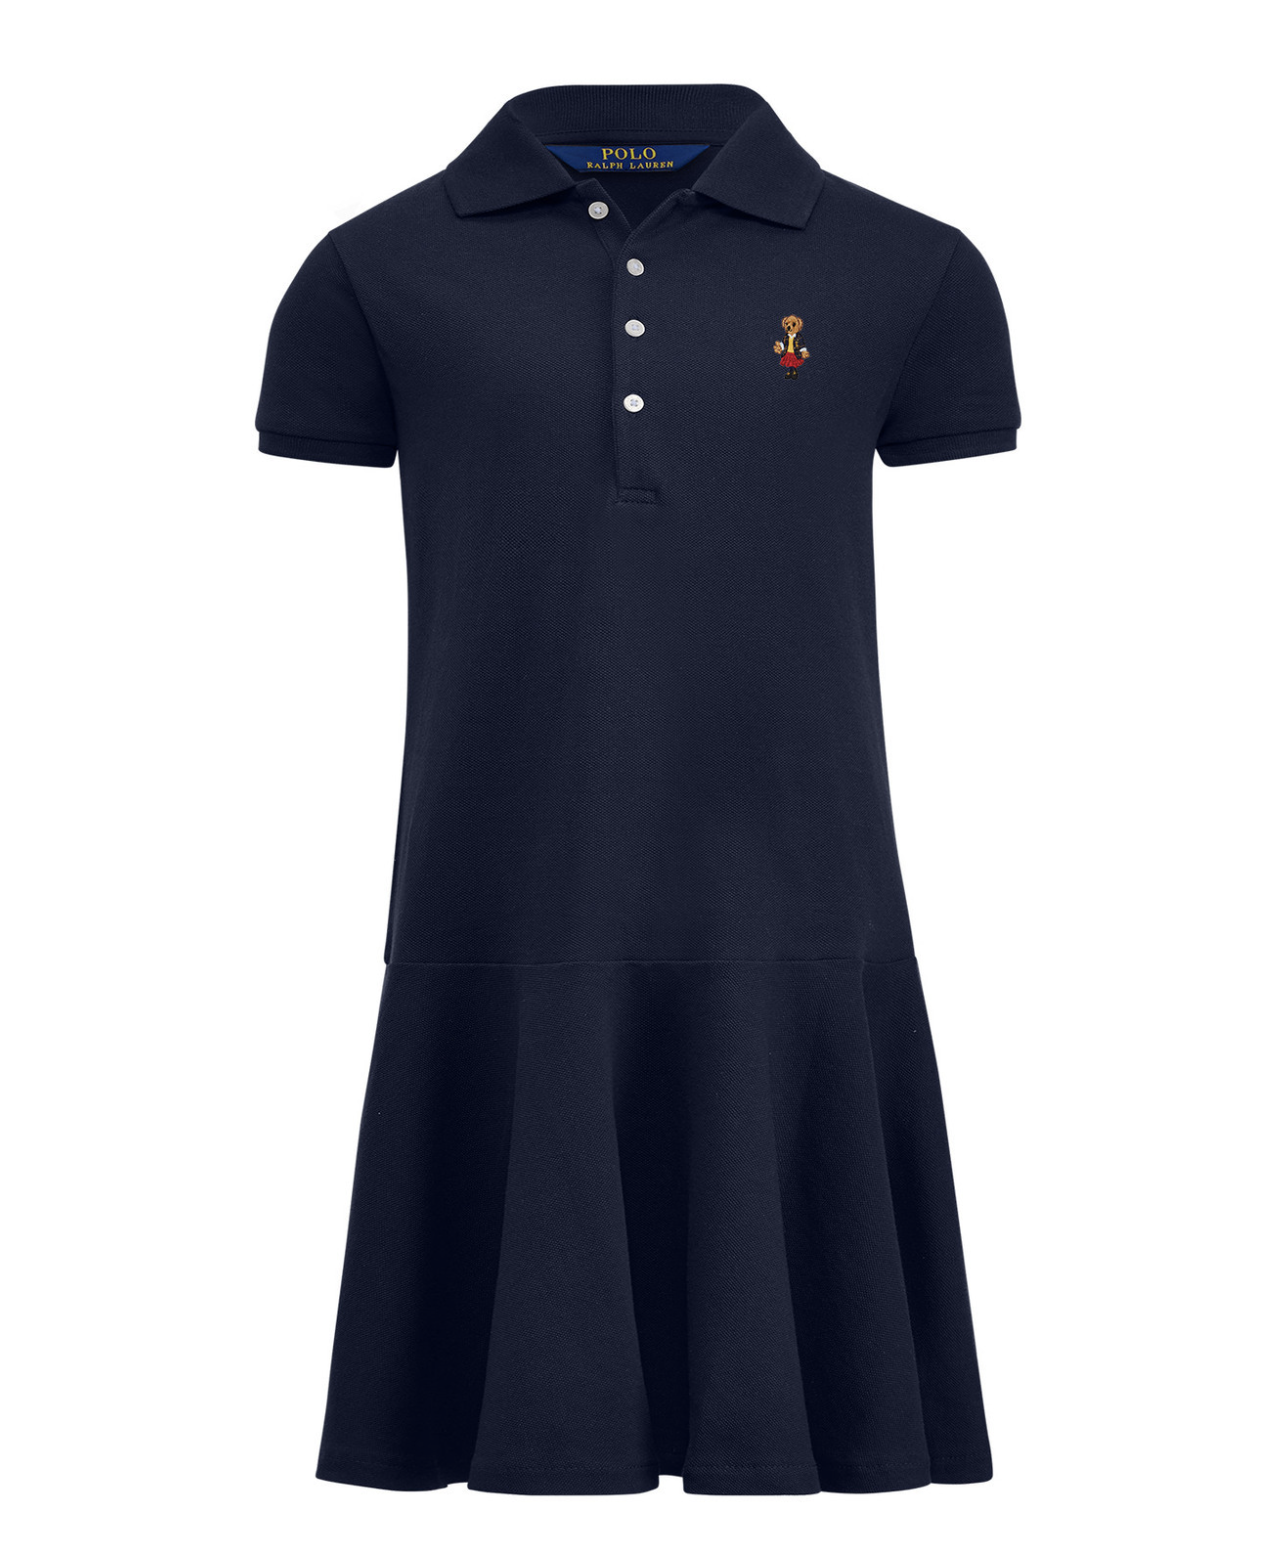 Polo Ralph Lauren Polo Shirt Mesh Big &Tall 3XB Navy w/Embroidered POLO  Bear NWT